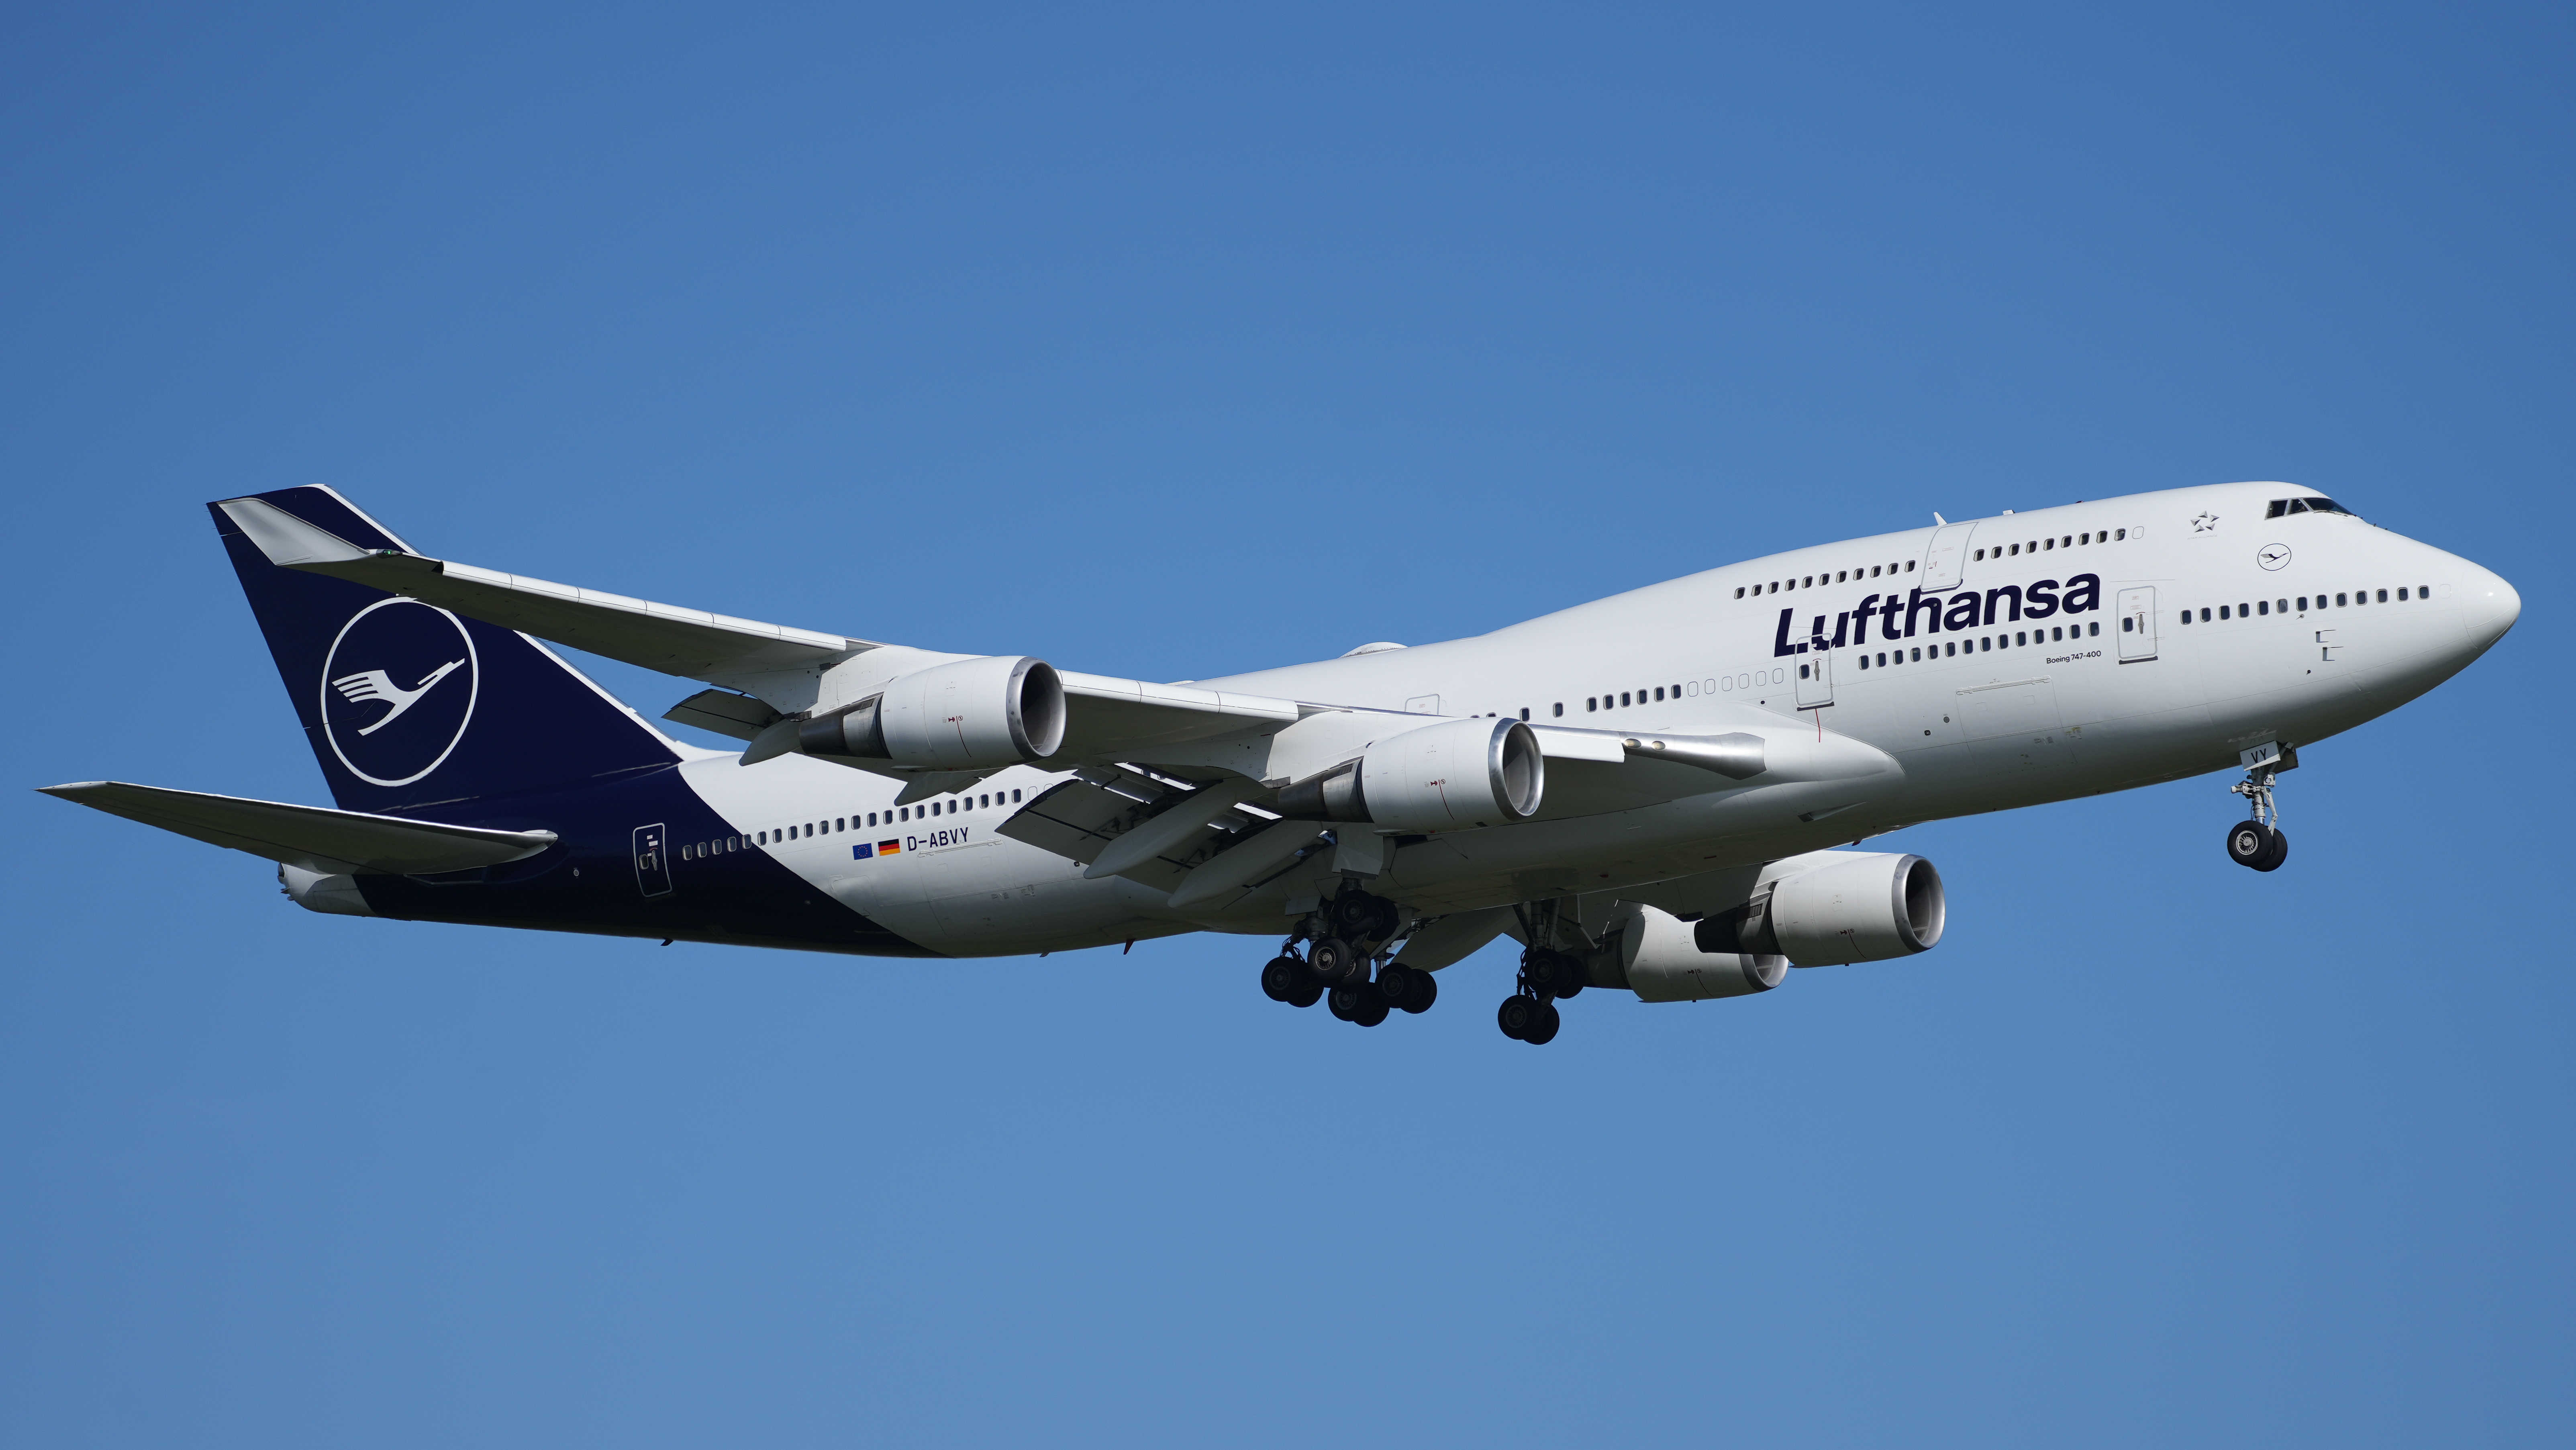 Boeing 747-400 - Wikipedia